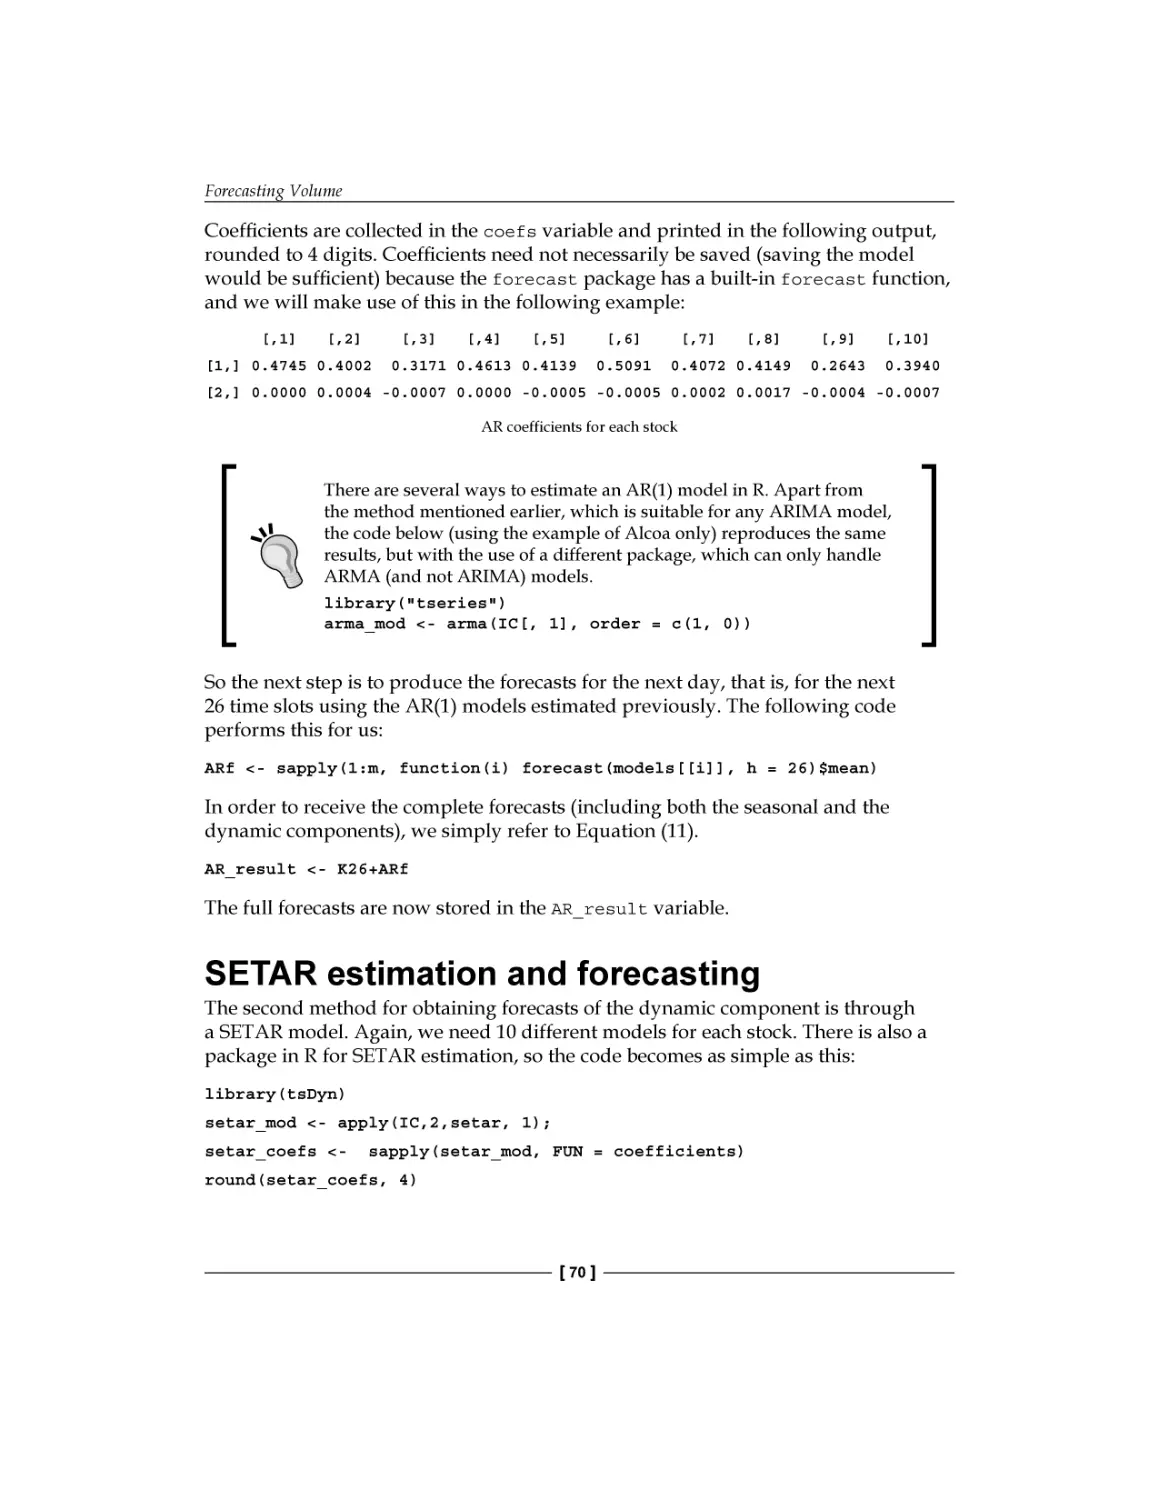 SETAR estimation and forecasting